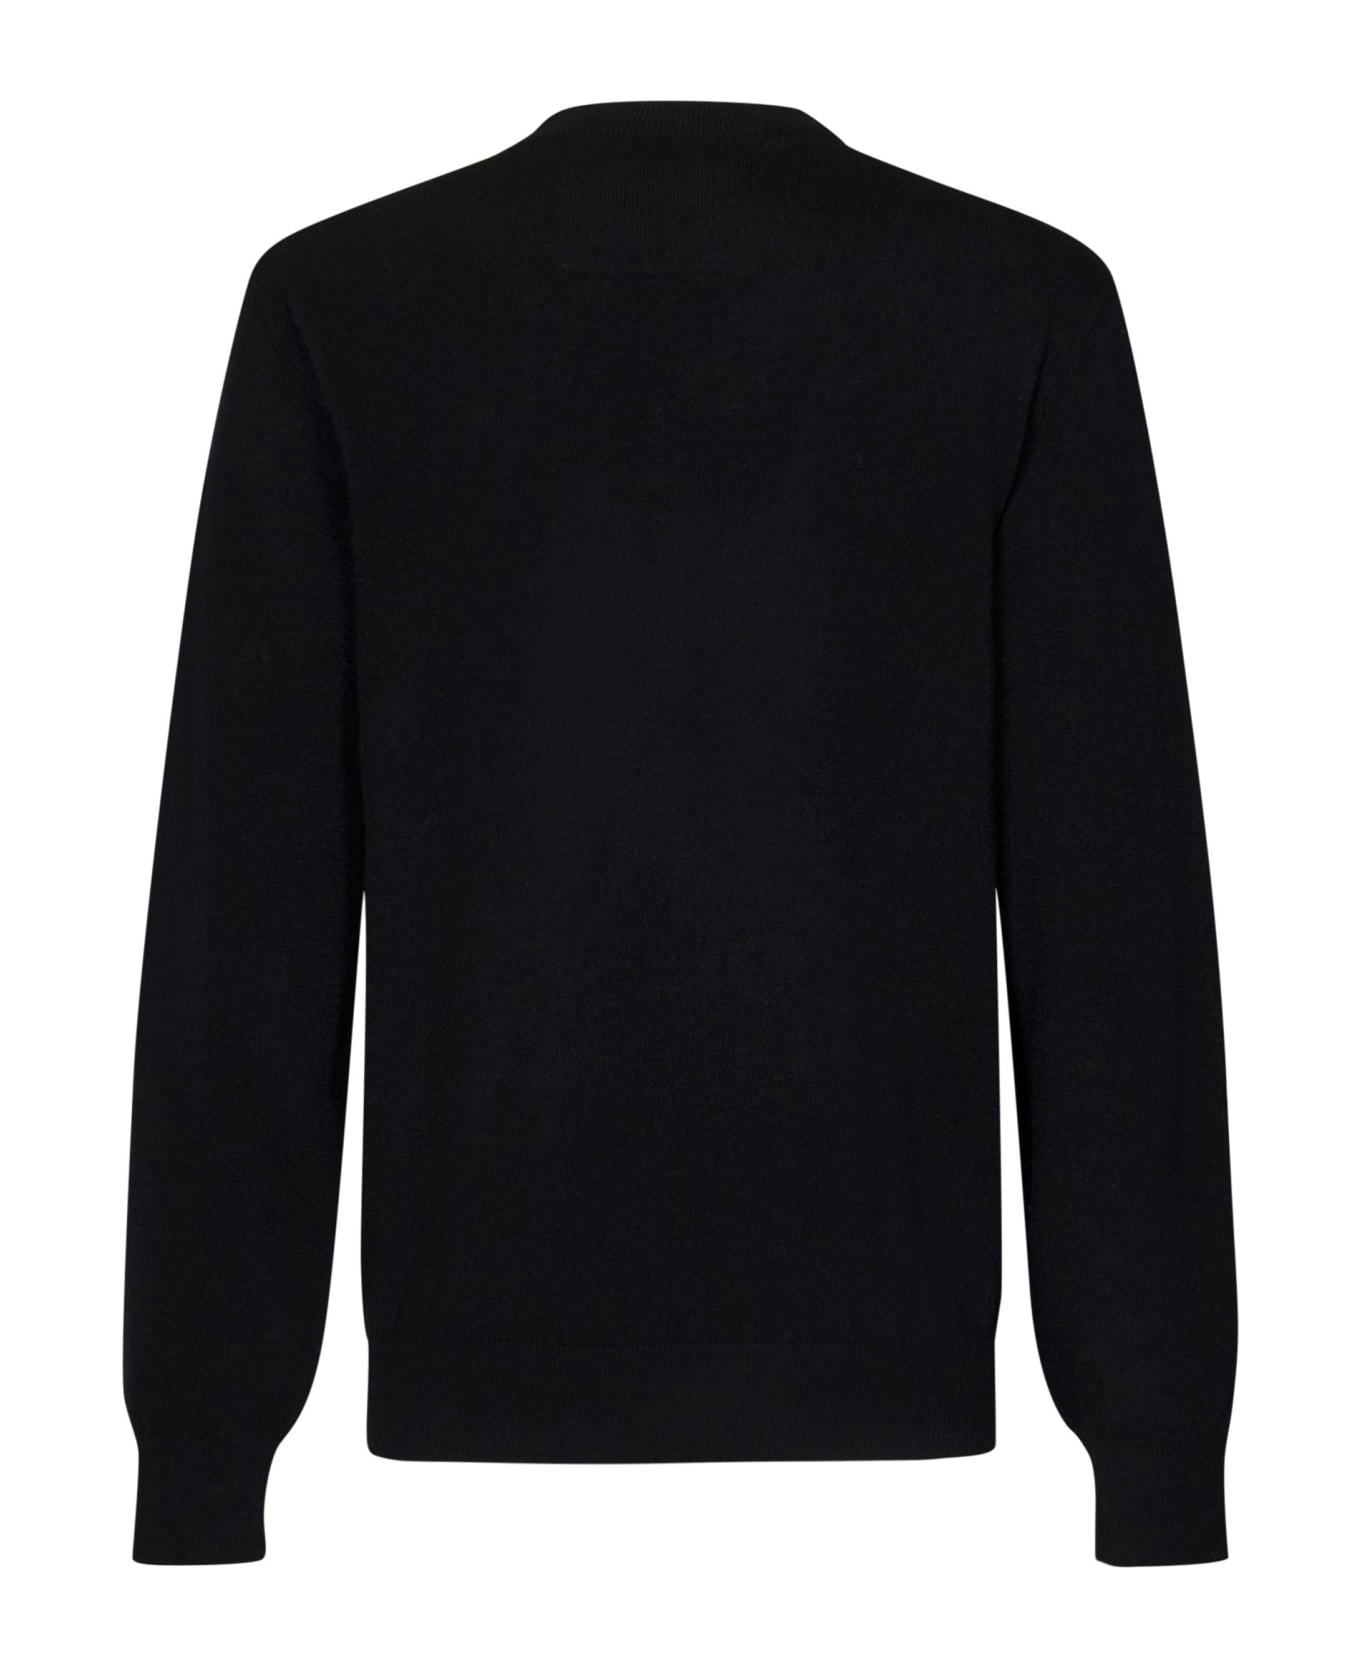 Givenchy Wool Knitwear - Black ニットウェア